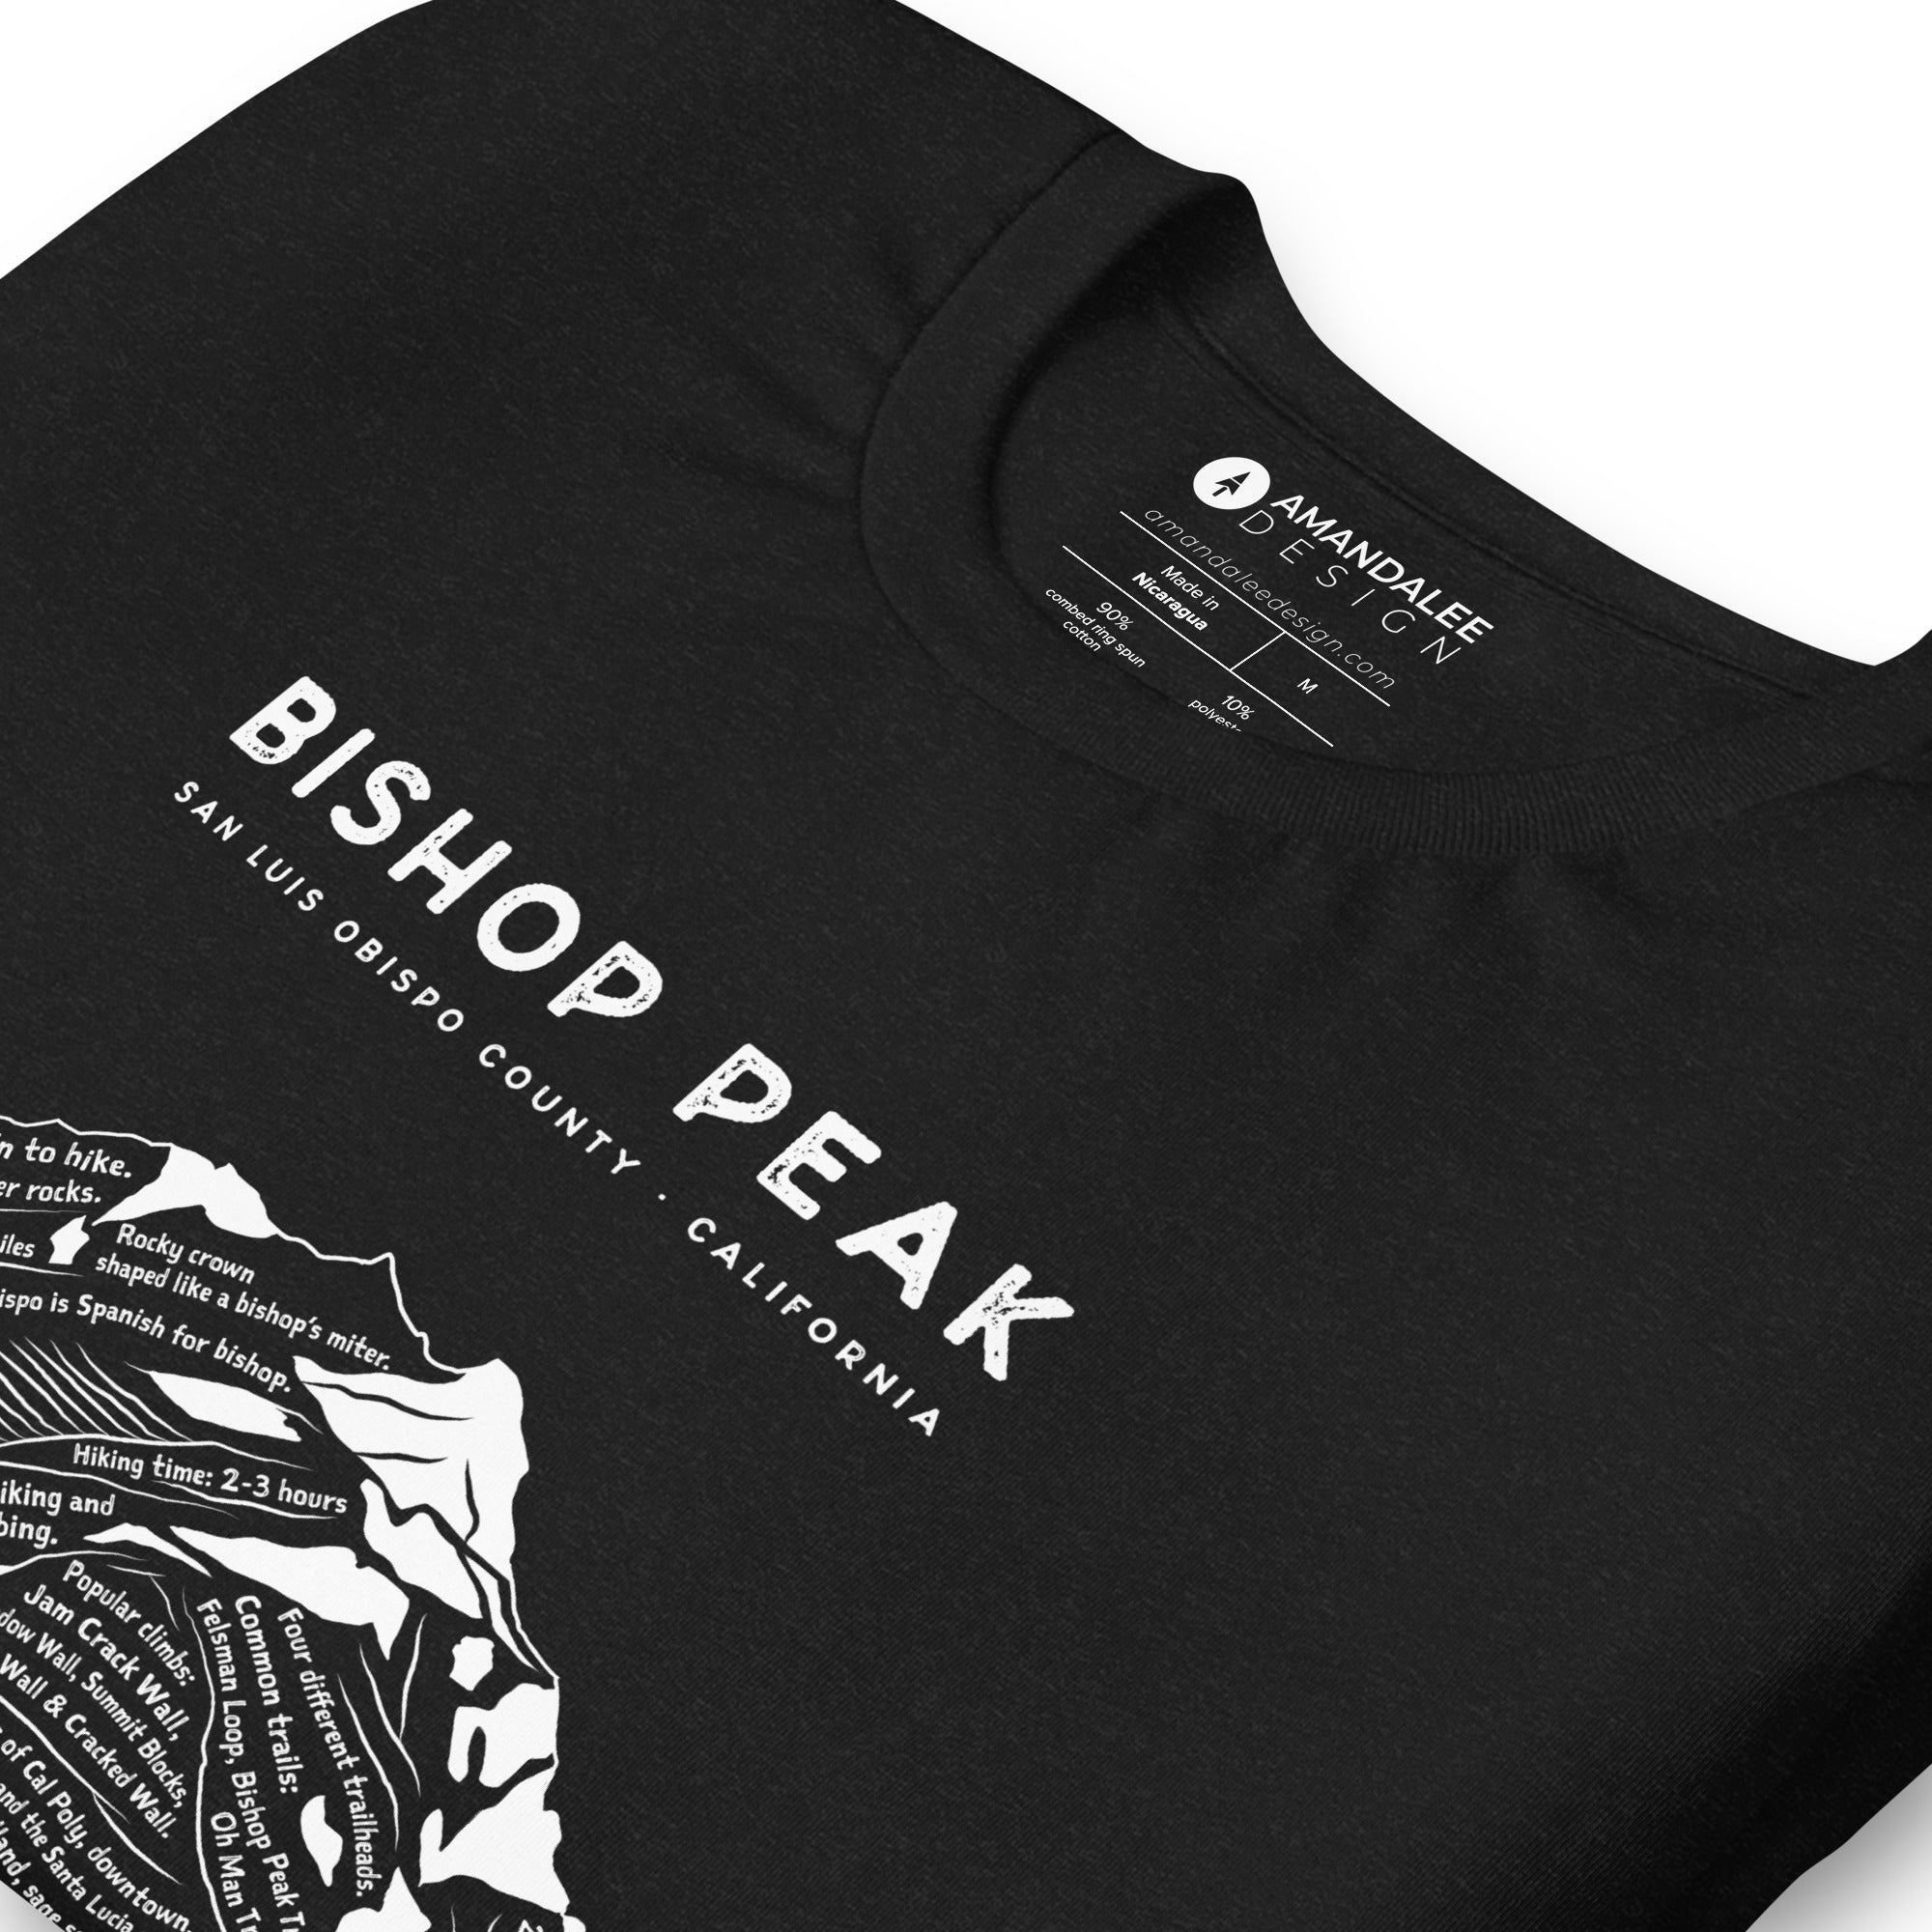 Hollister Peak Short-Sleeve Unisex Triblend Shirt – Amandalee Design